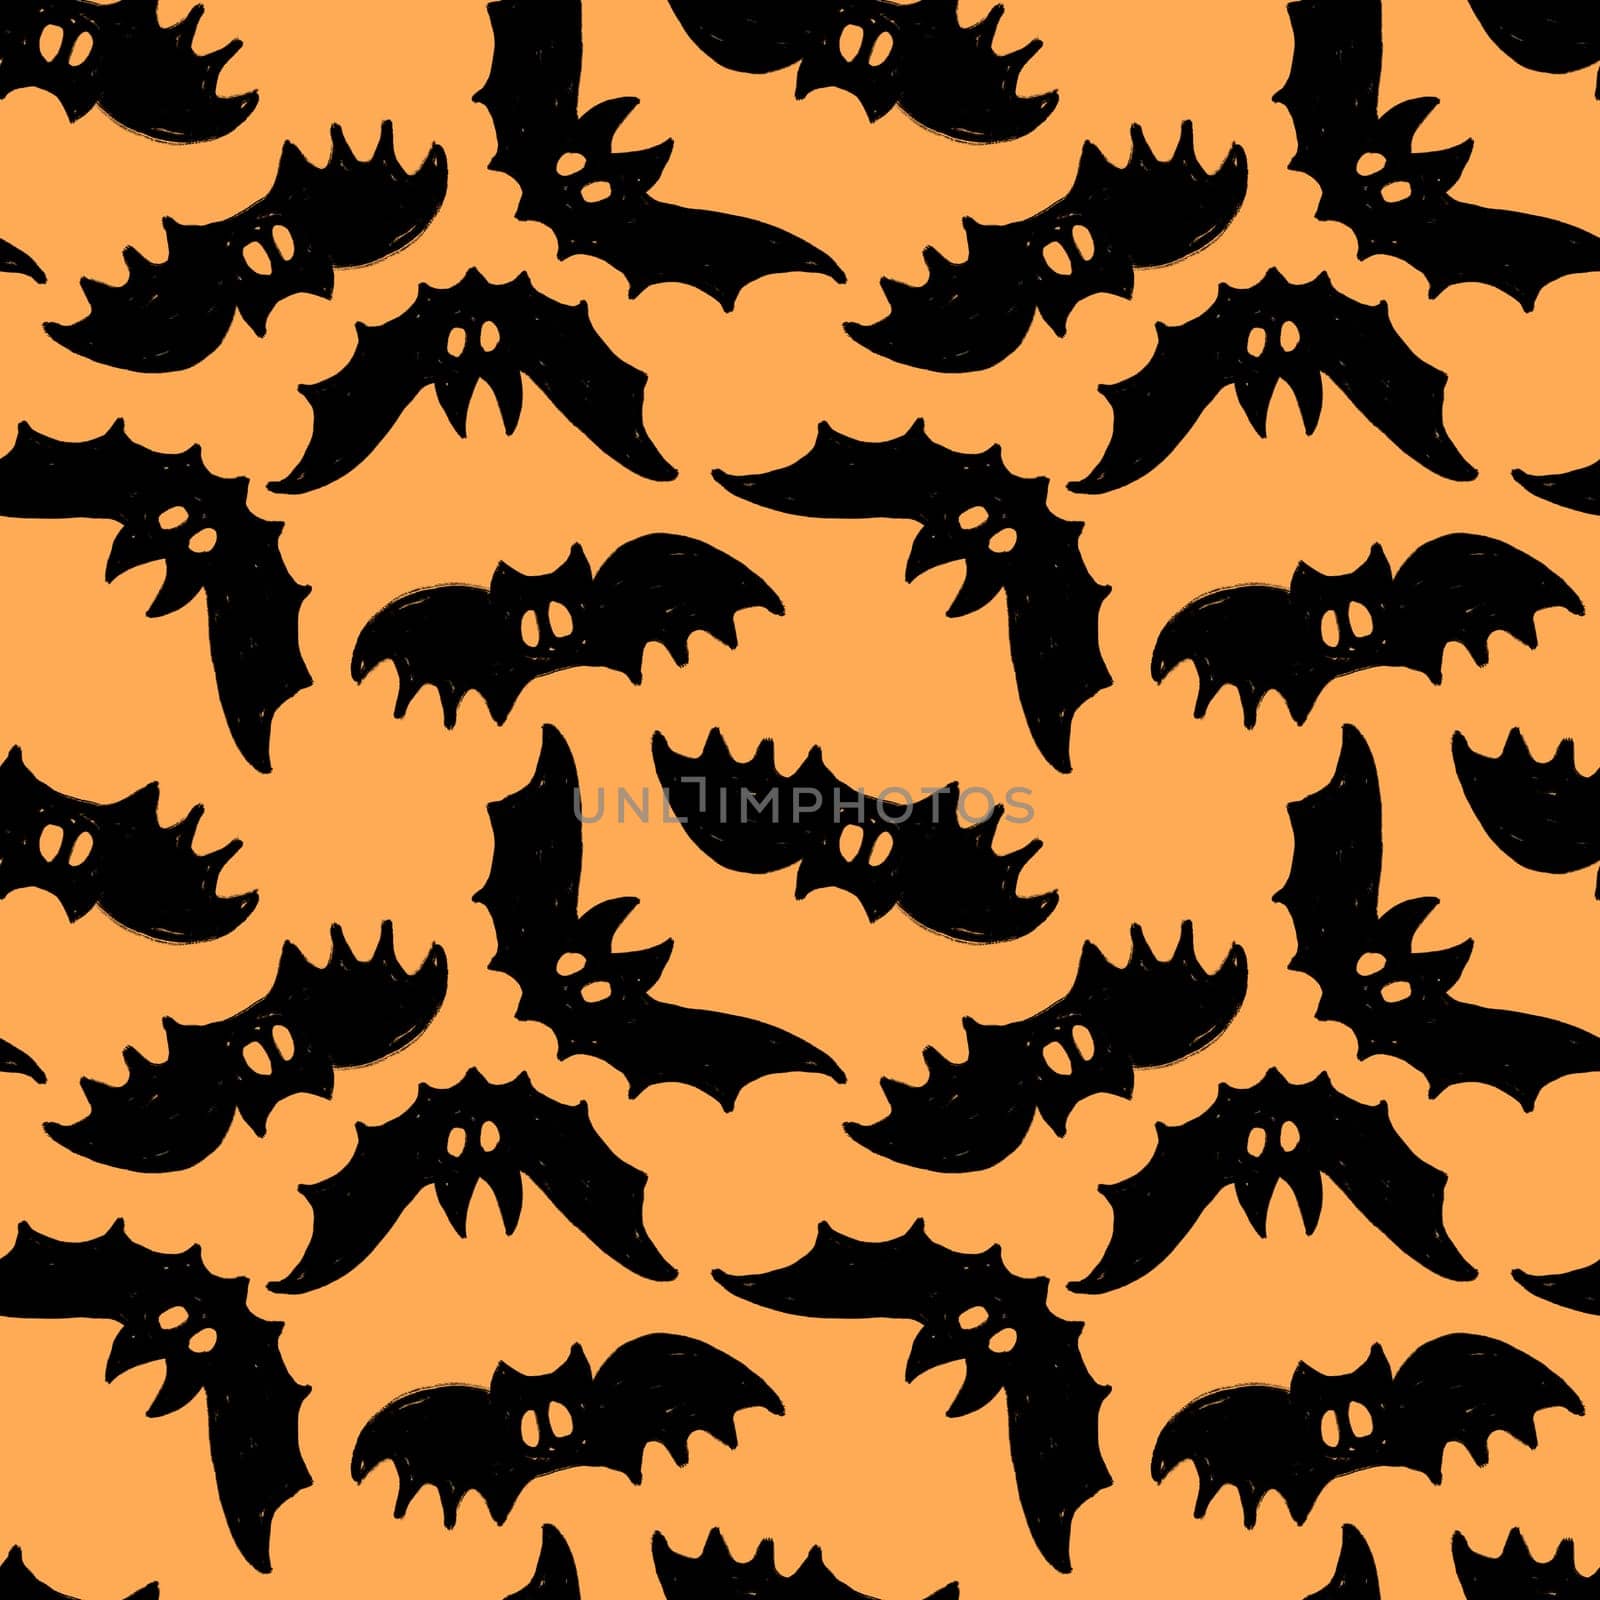 Hand drawn seamless pattern with black Halloween bats on orange background. Fall autumn scary spooky horror print, flying vampires season art